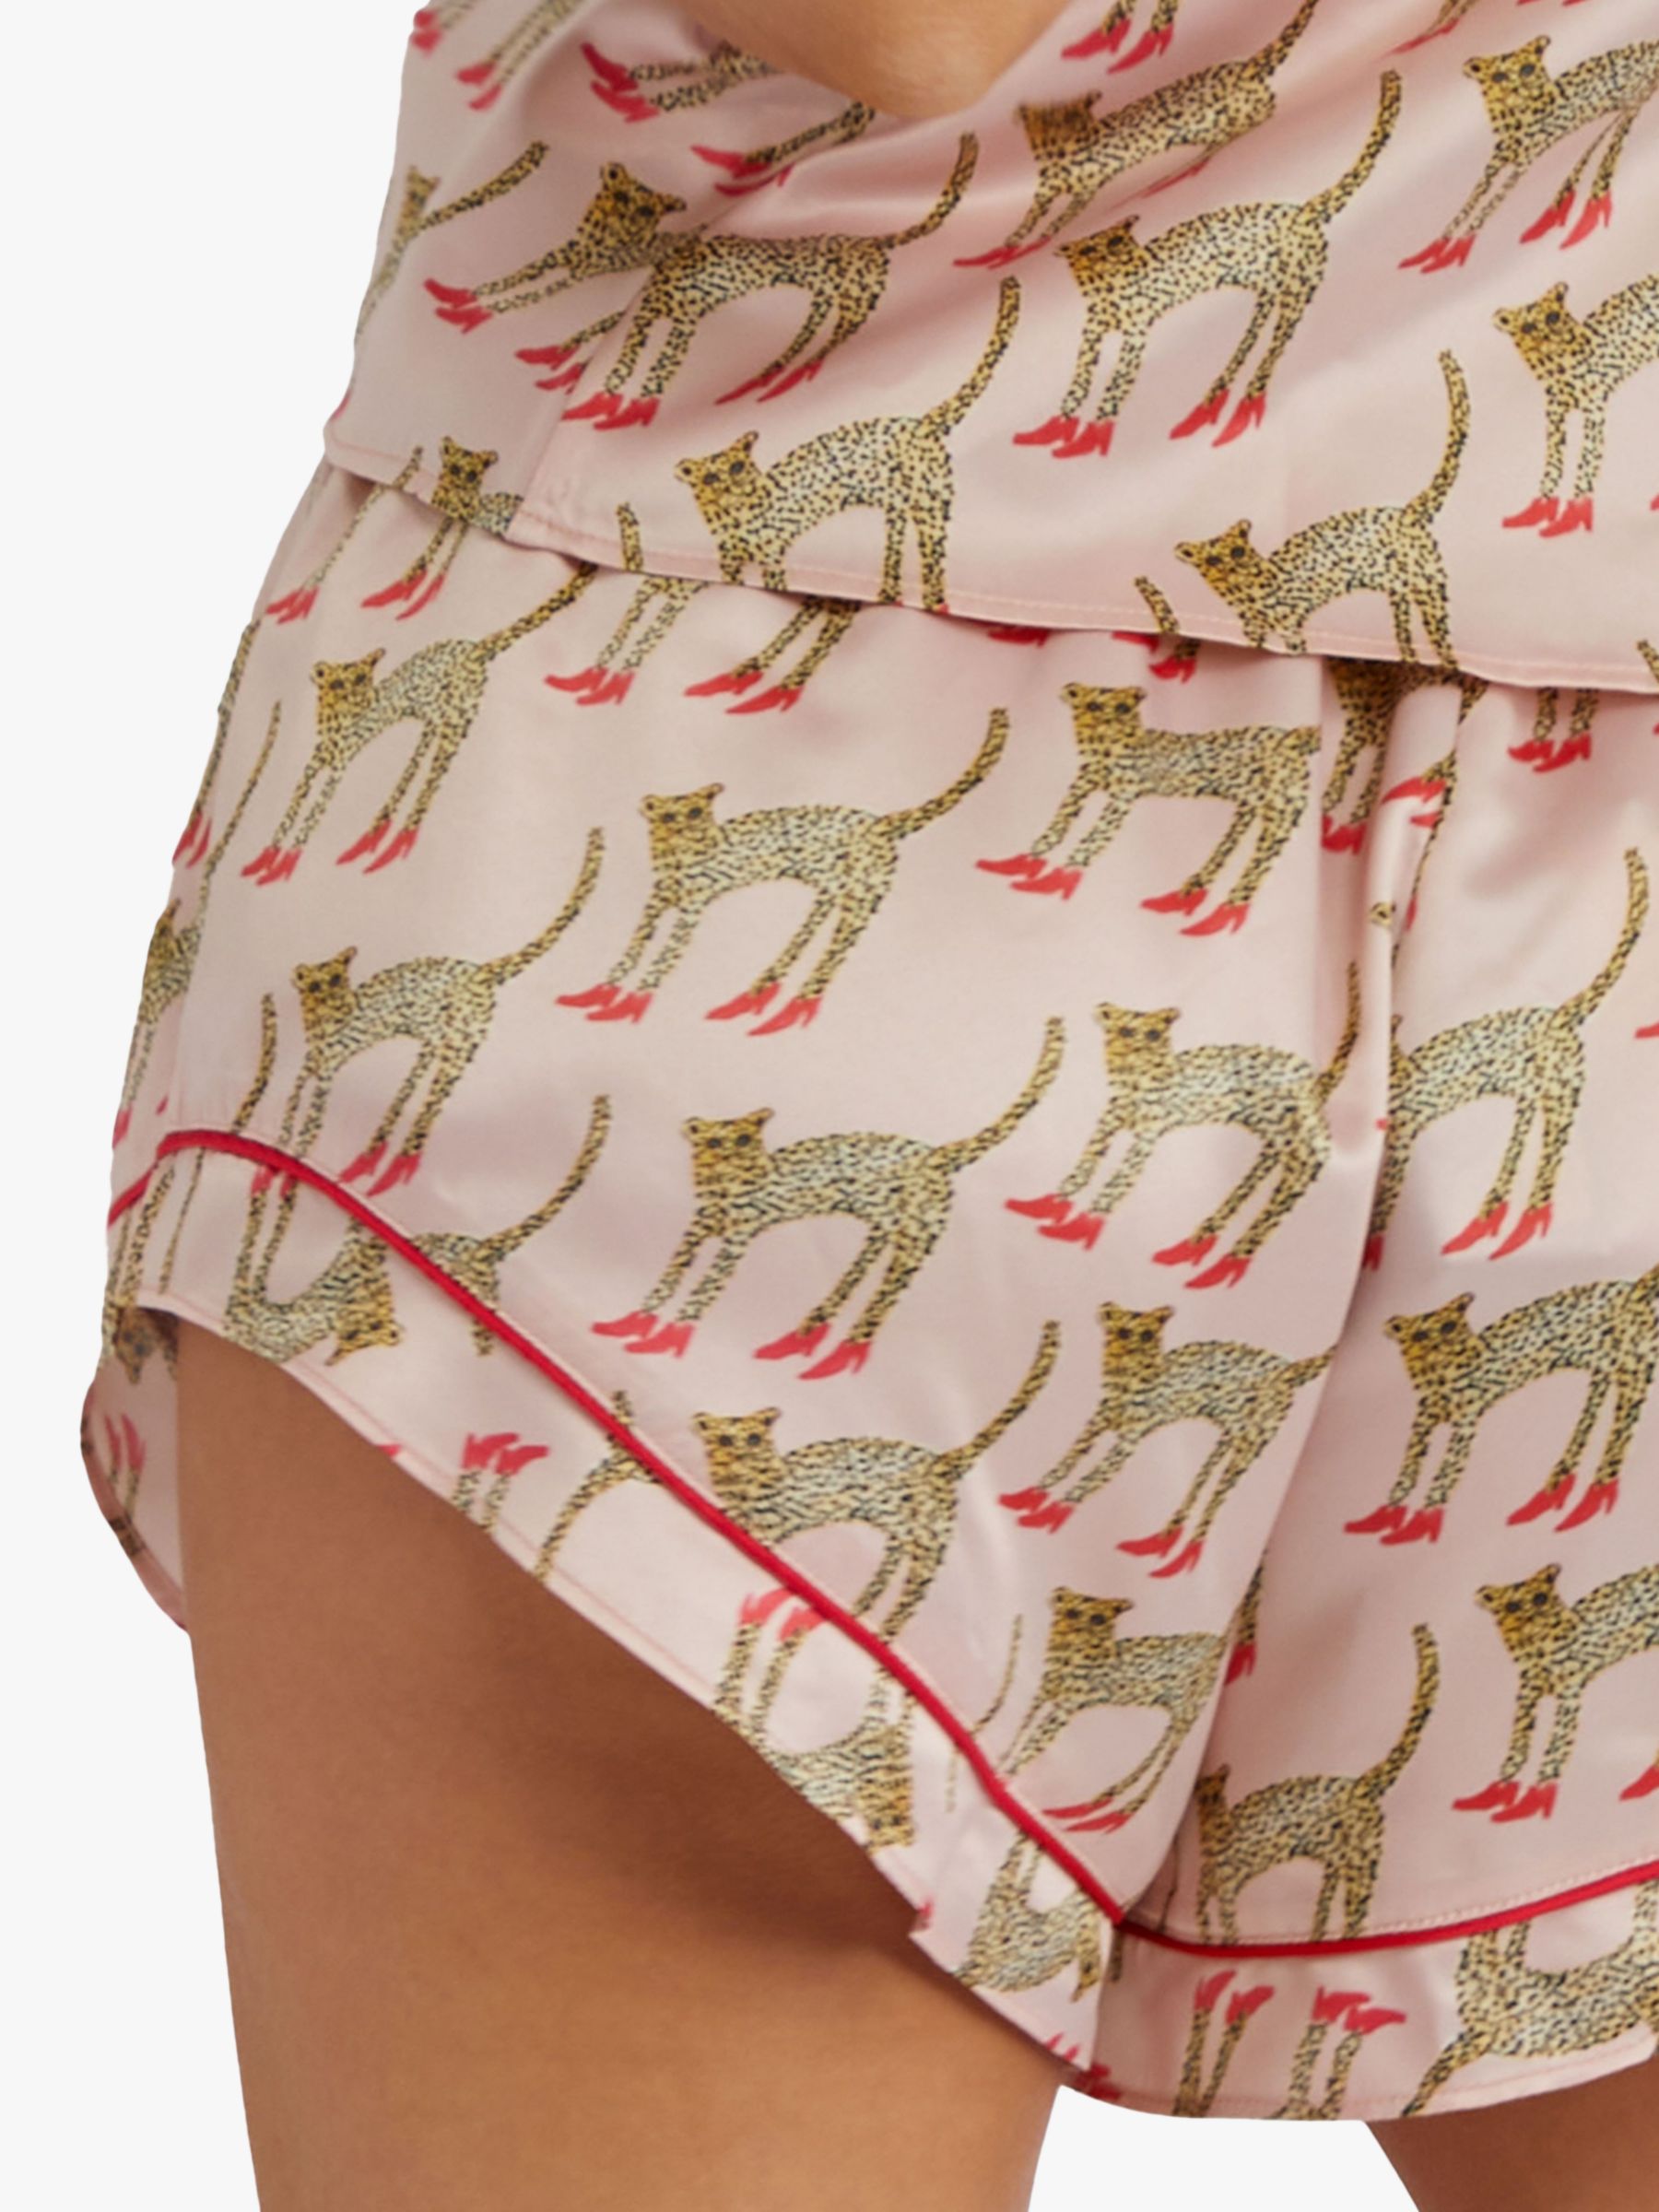 Buy Playful Promises Bouffants Cheetah in Heels Pyjama Shorts, Mixed Print Online at johnlewis.com